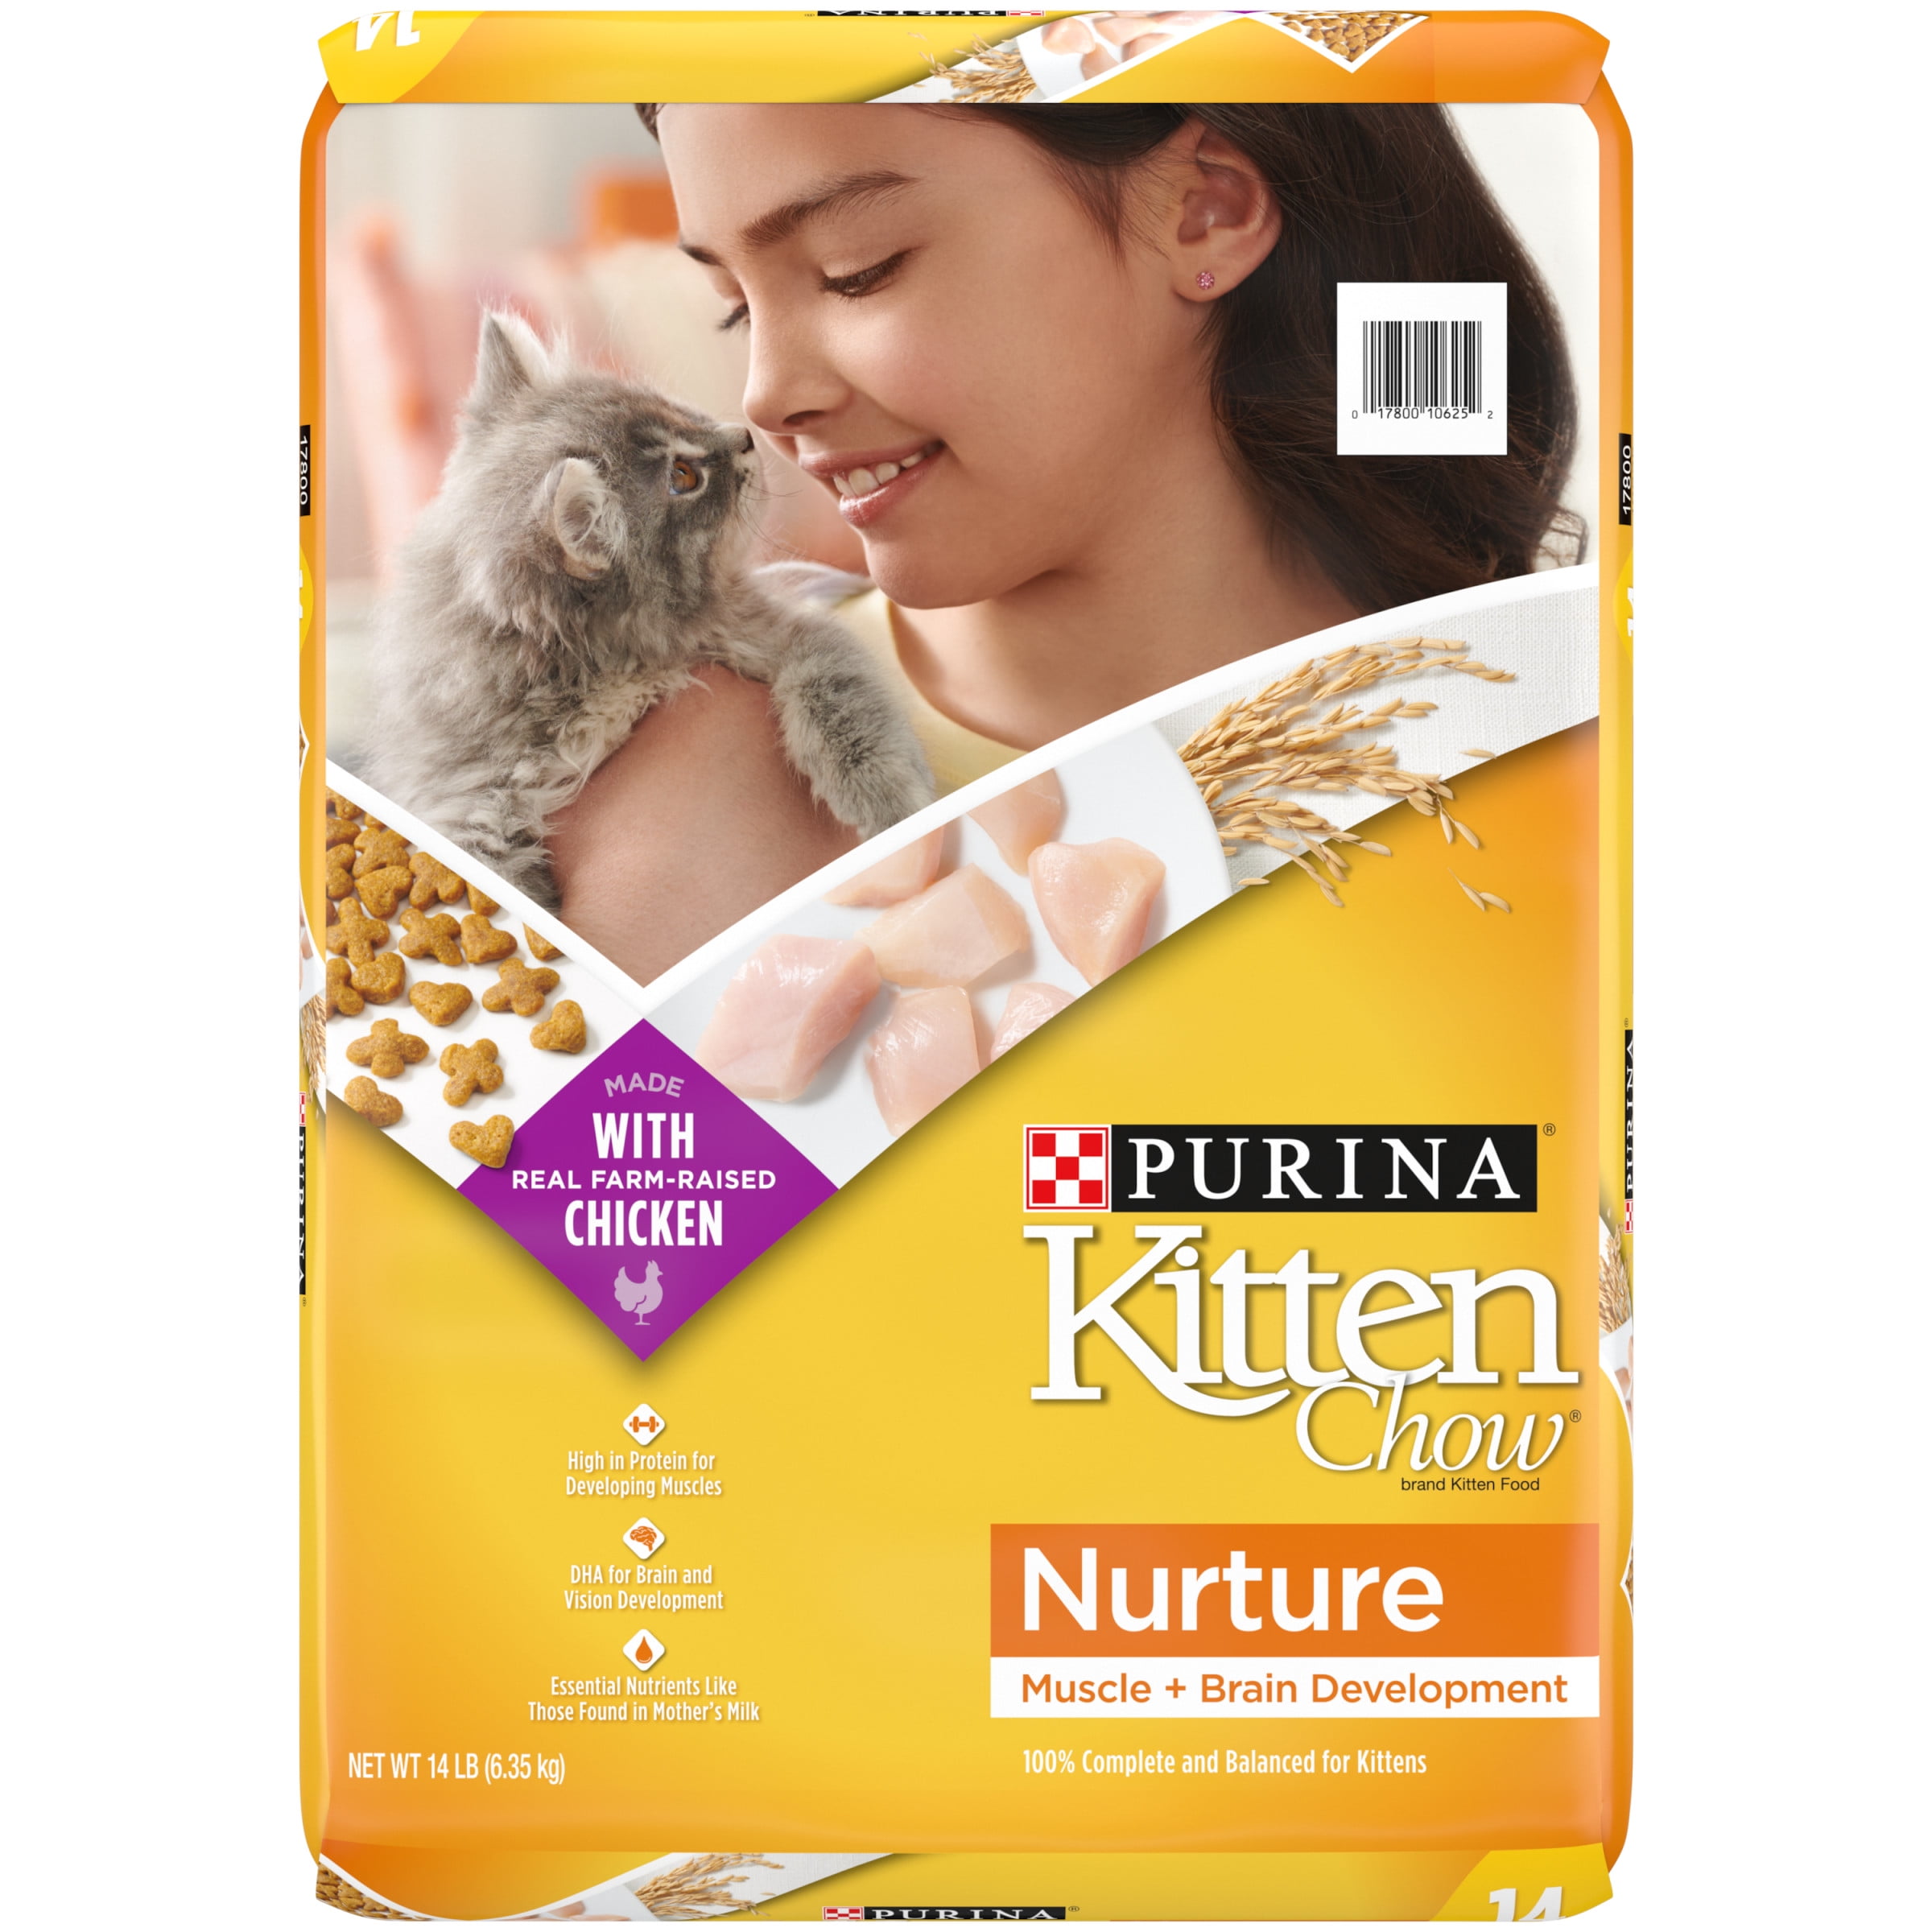 Purina Kitten Chow Nurture Chicken Recipe Dry Cat Food for Kittens, 14 lb Bag